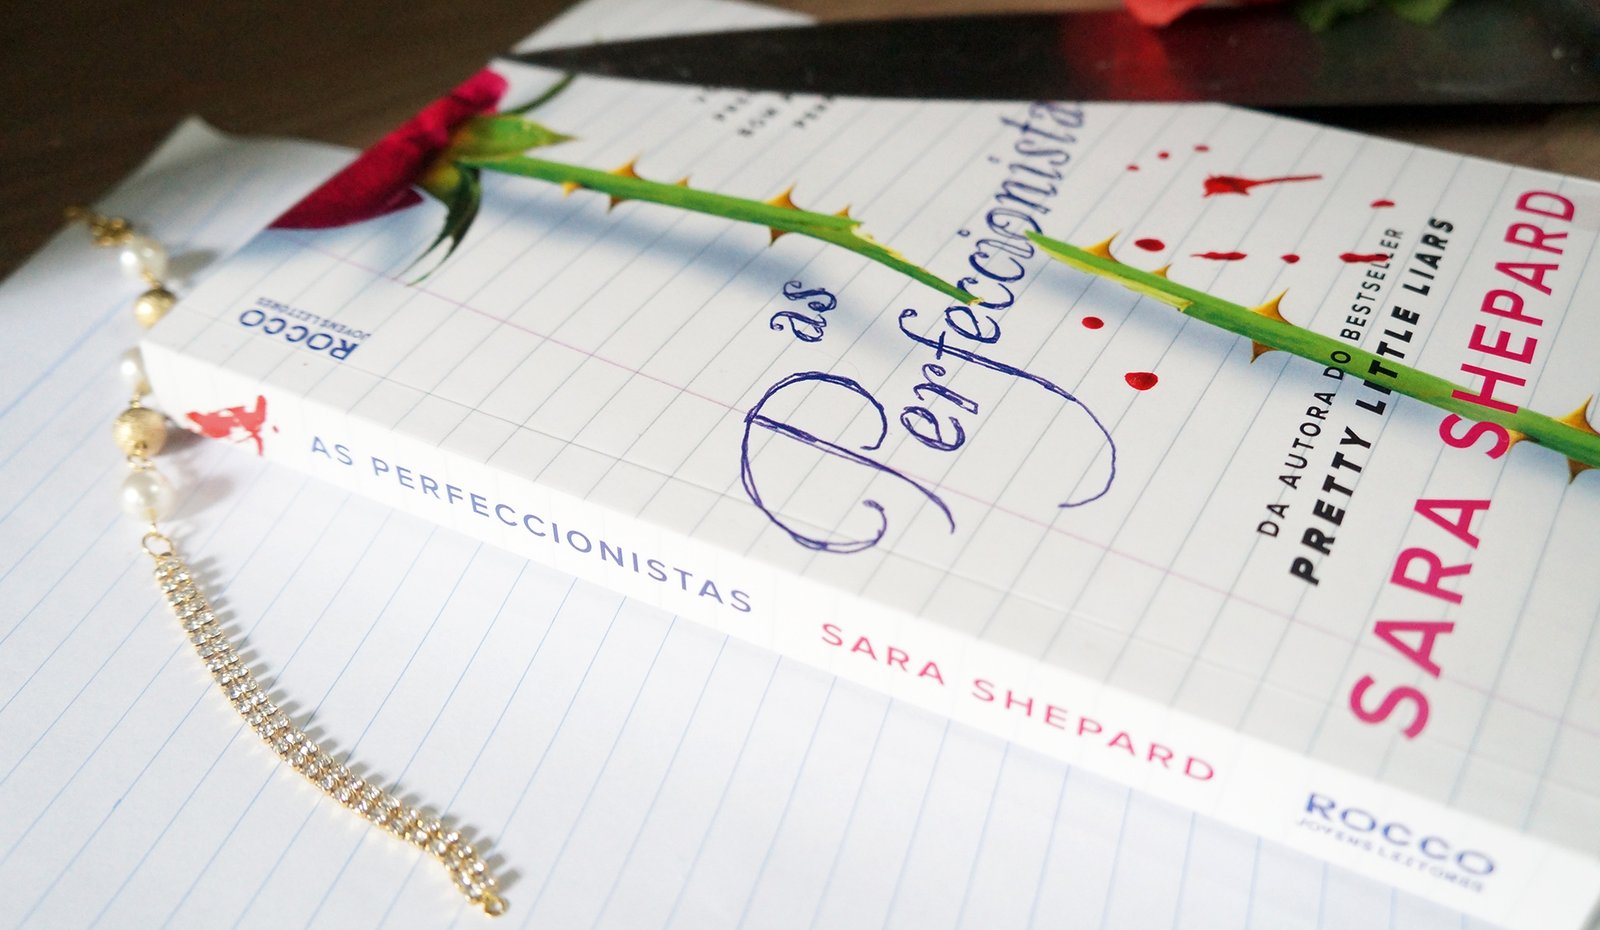 As Perfeccionistas — Sara Shepard 3